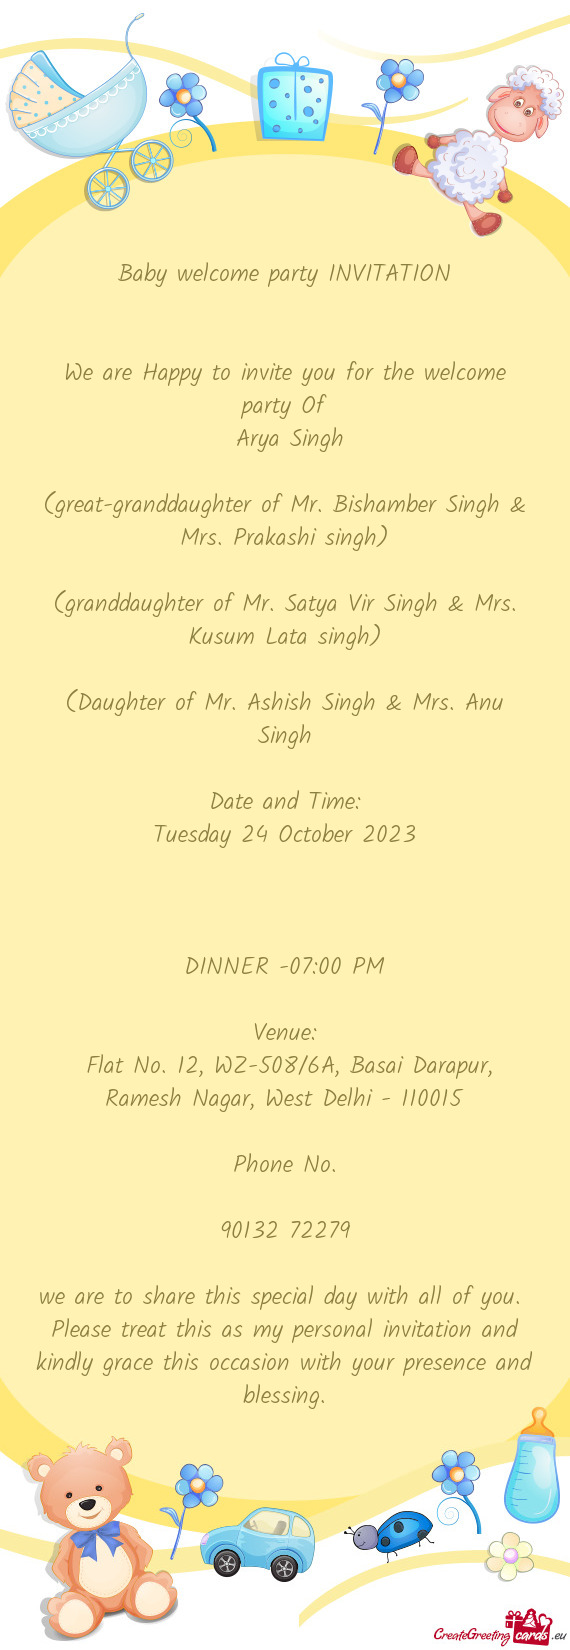 (granddaughter of Mr. Satya Vir Singh & Mrs. Kusum Lata singh)